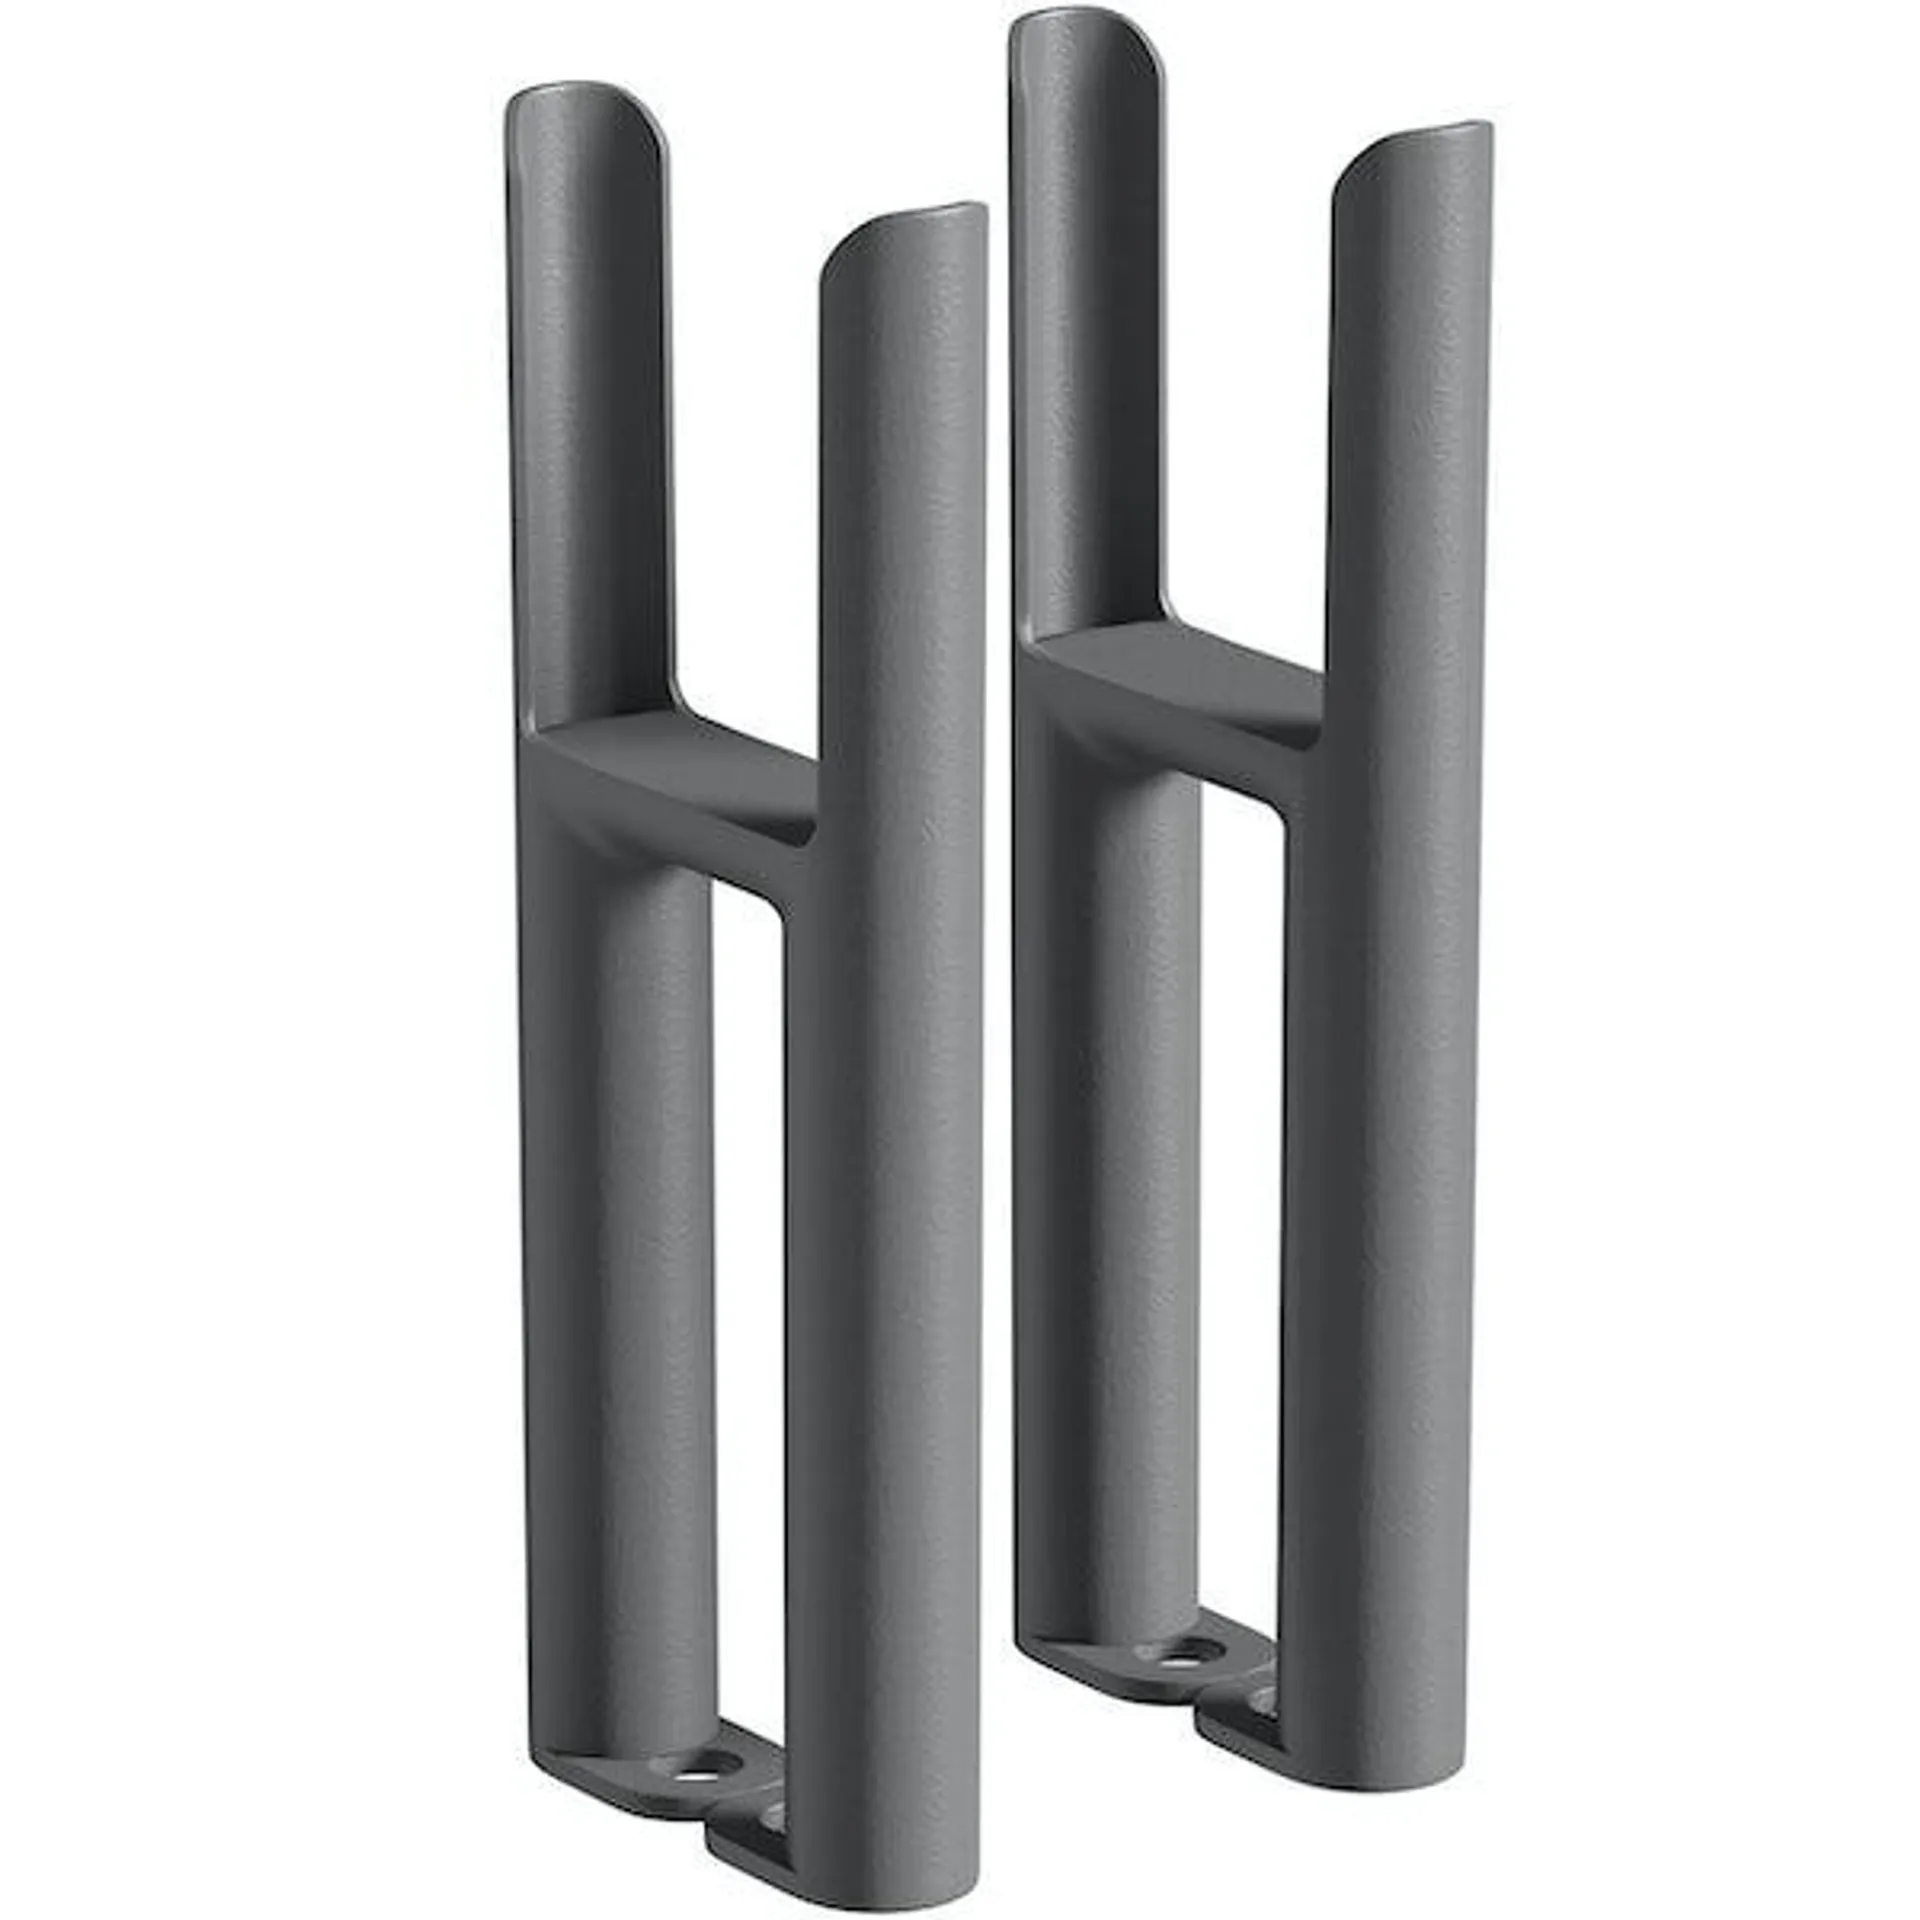 The Heating Co. Corso anthracite grey 3 column radiator feet